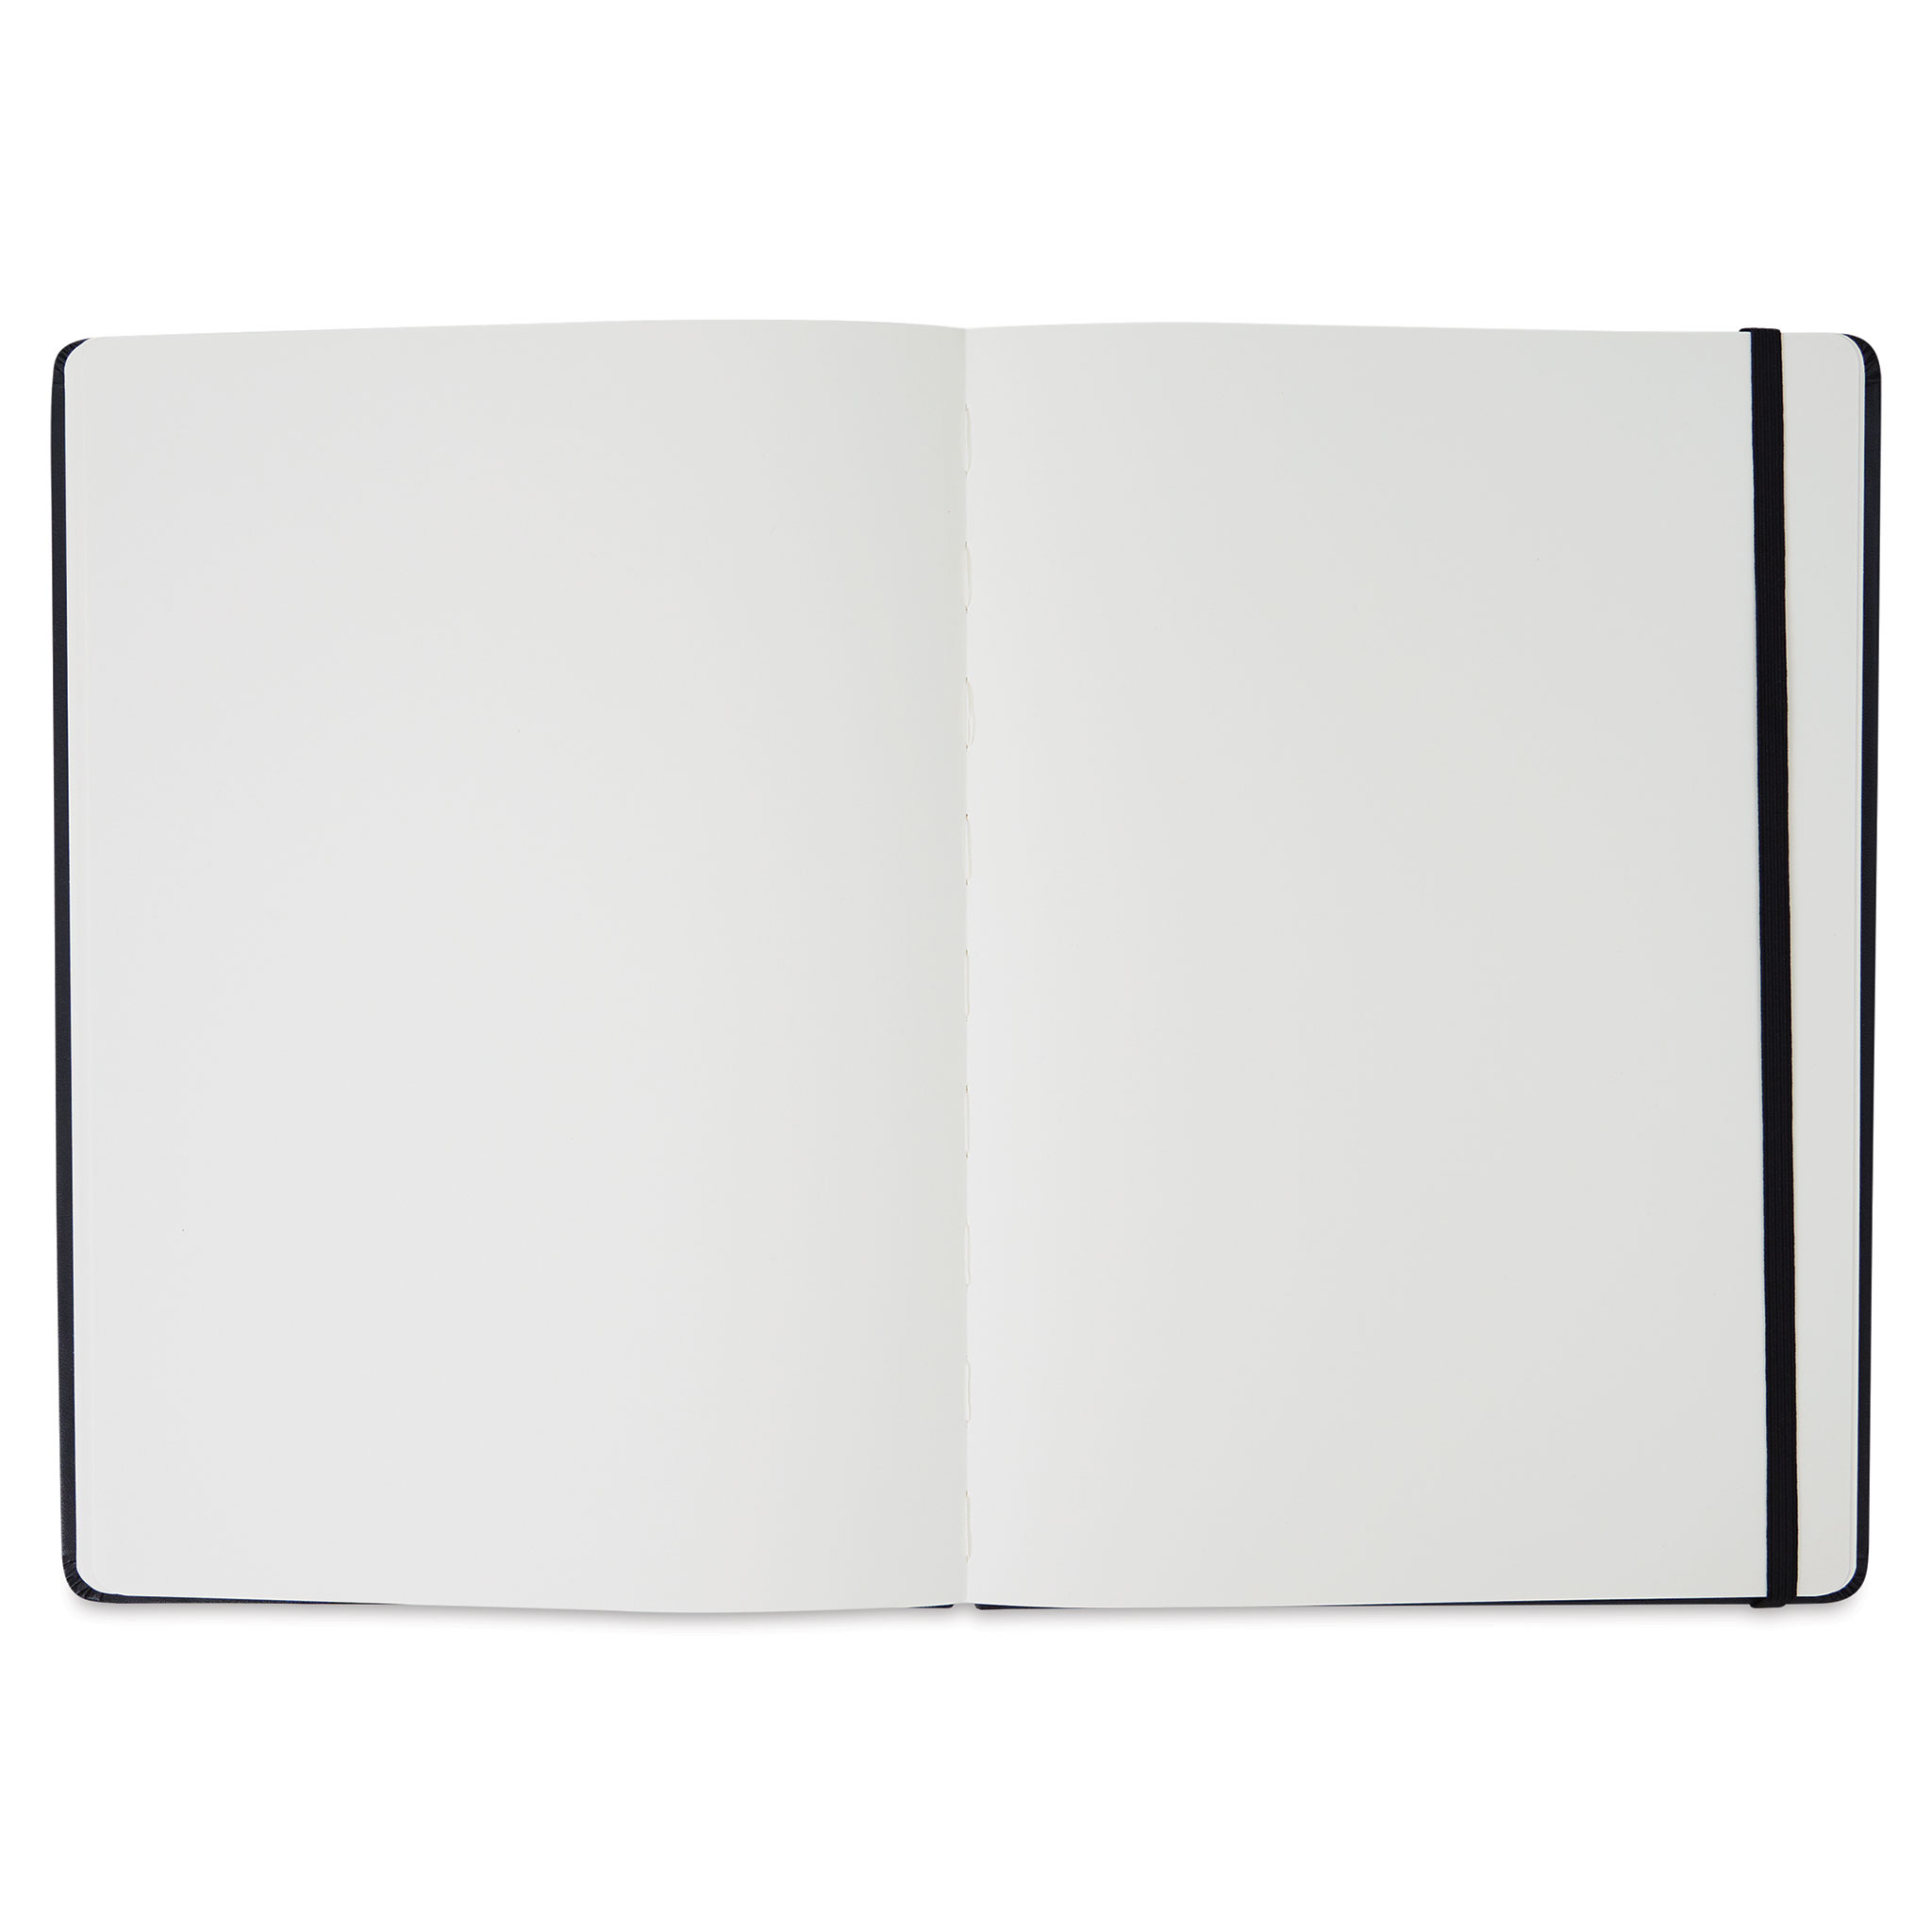 Moleskine Folio Sketch Notebook, A4, 8.25 x 11.75